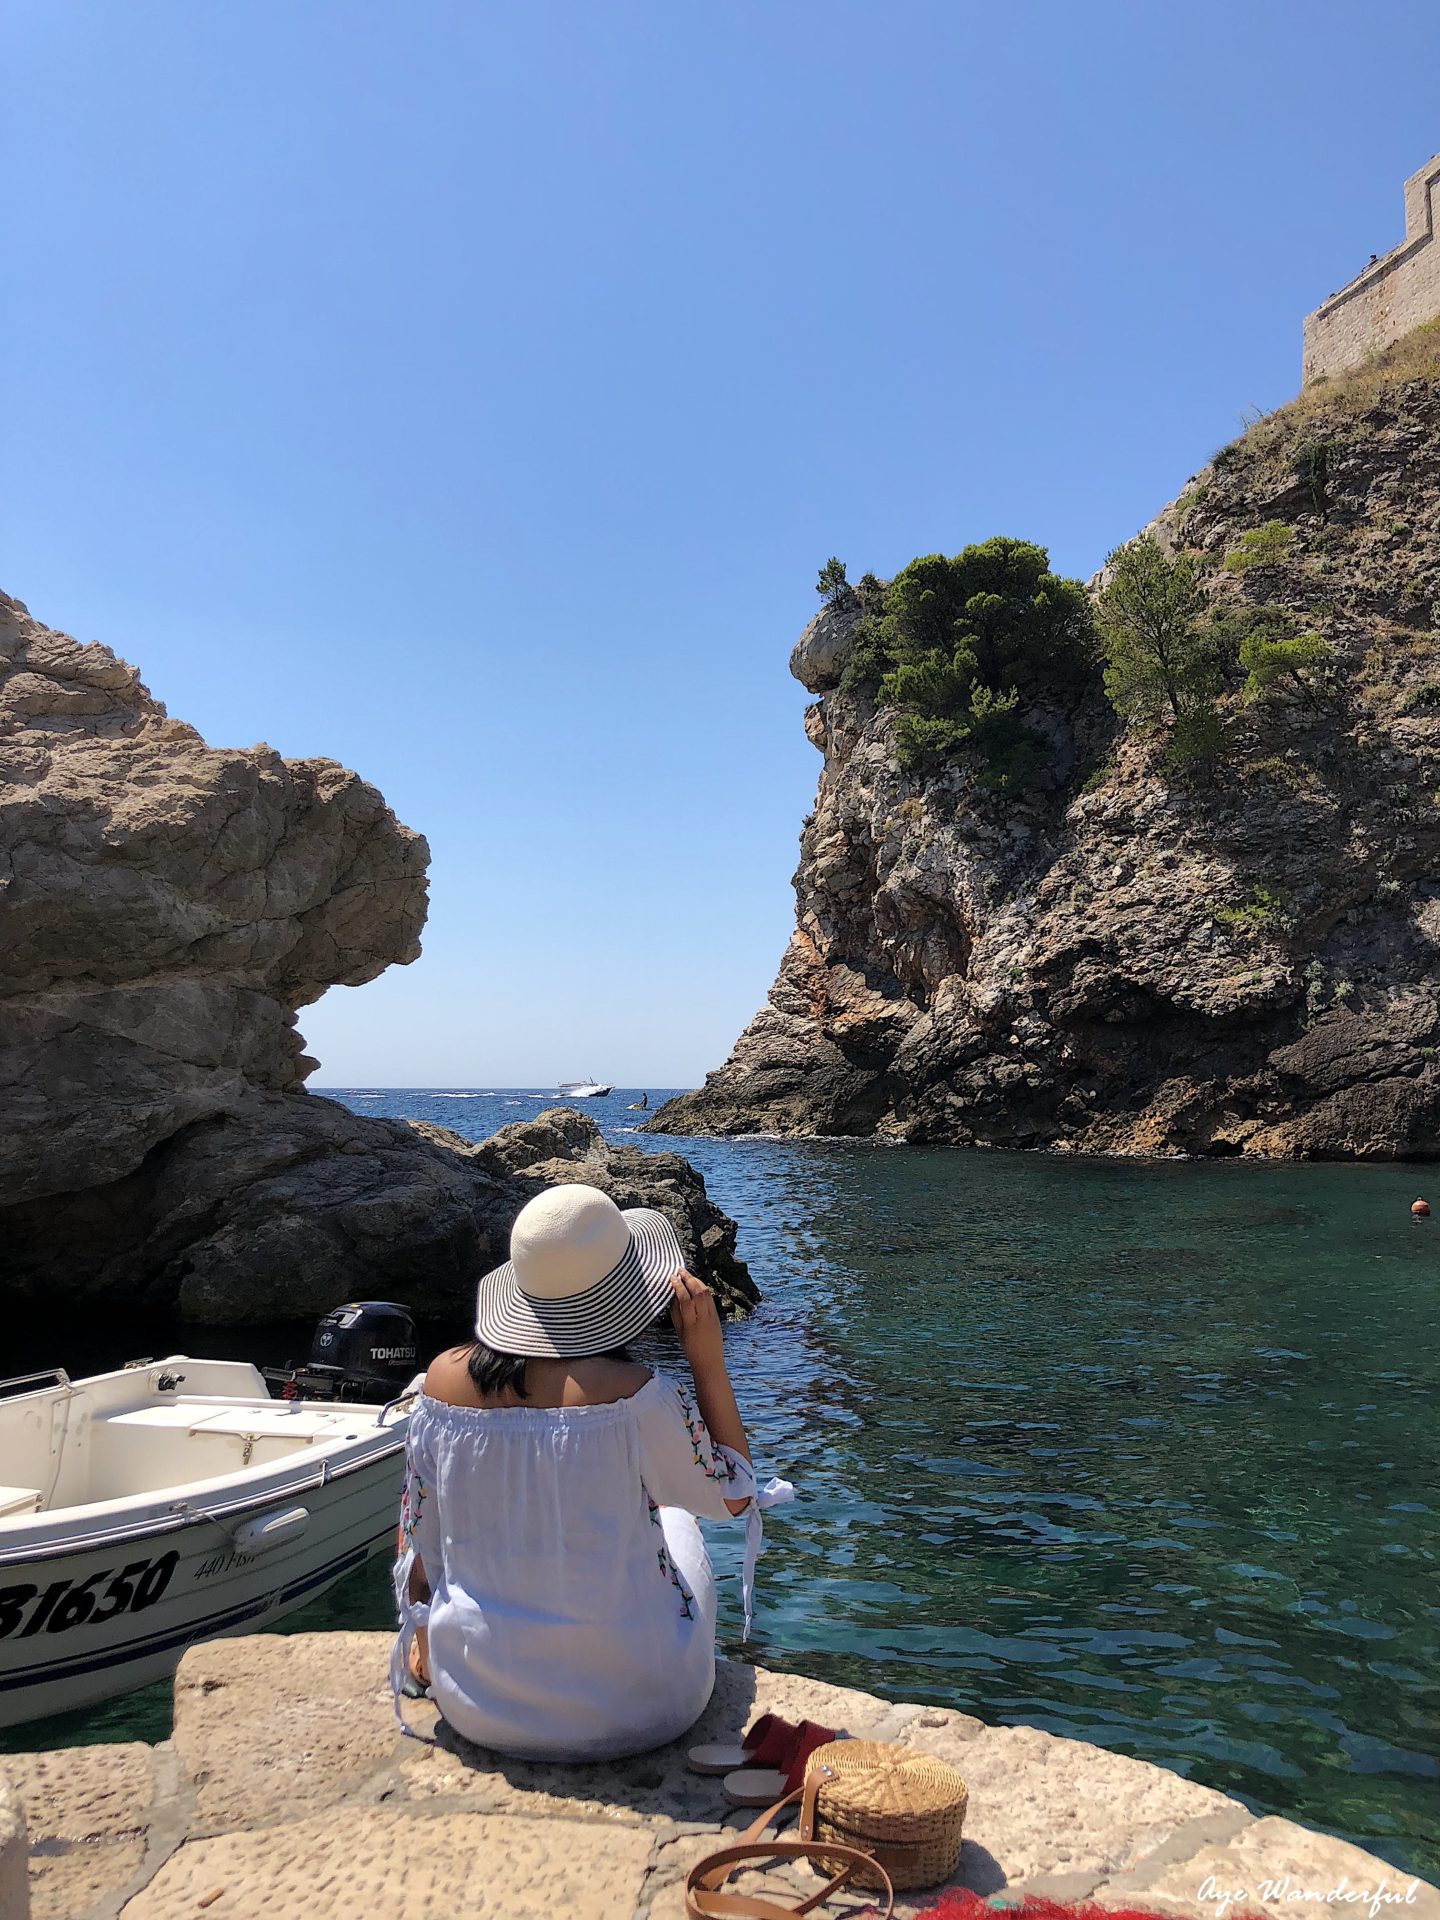 Dubrovnik Game of Thrones filling location Blackwater bay